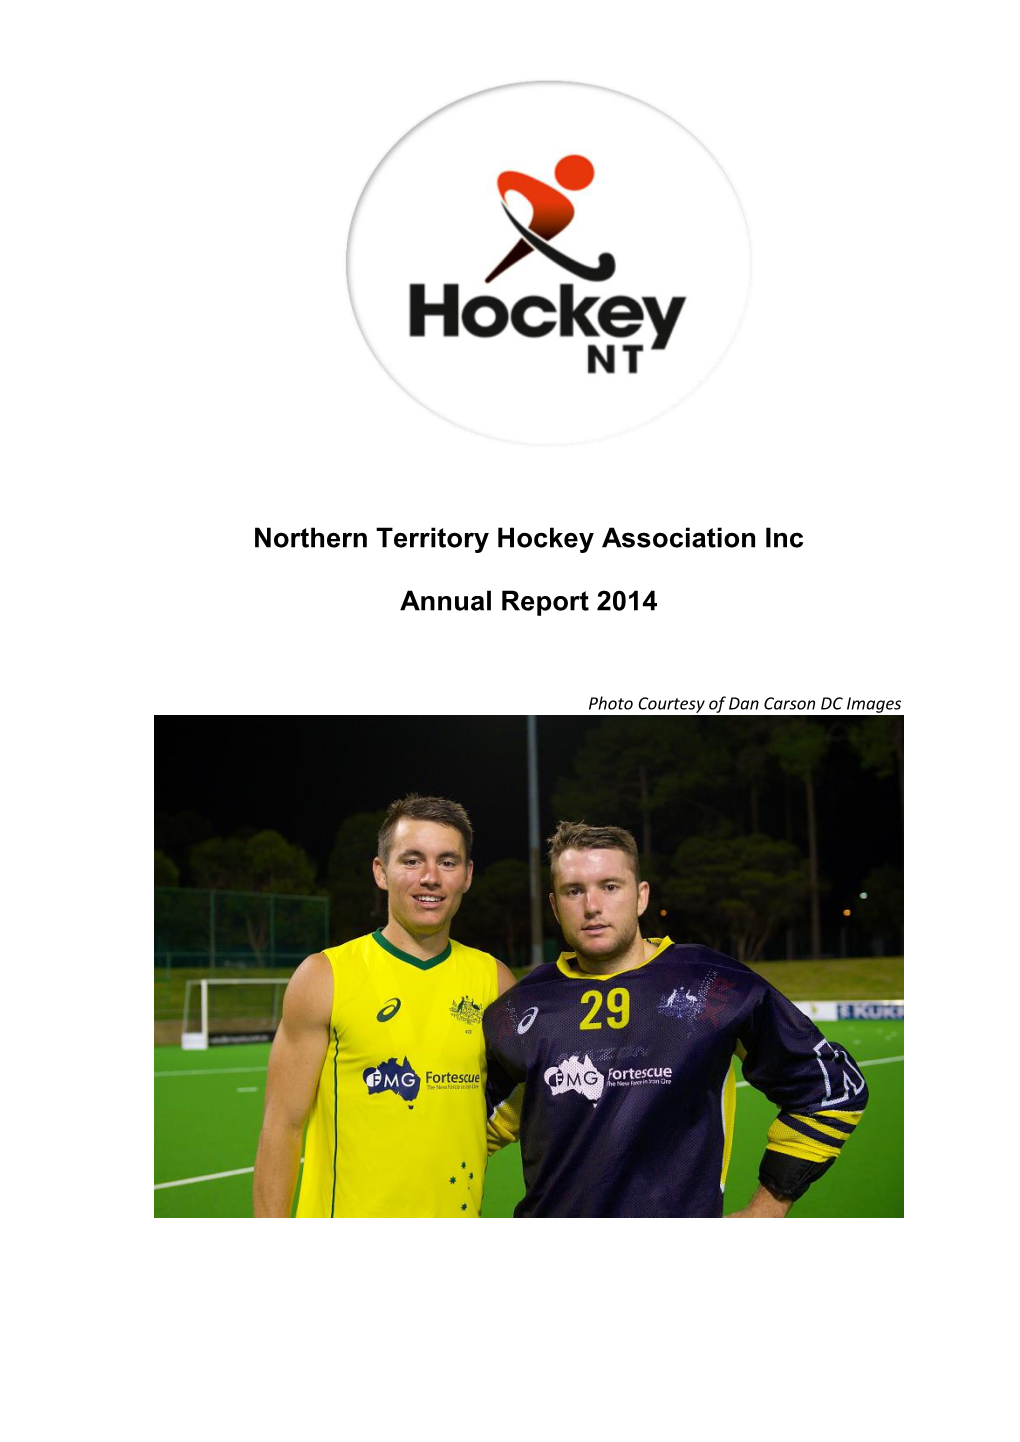 Northern Territory Hockey Association Inc Annual Report 2014